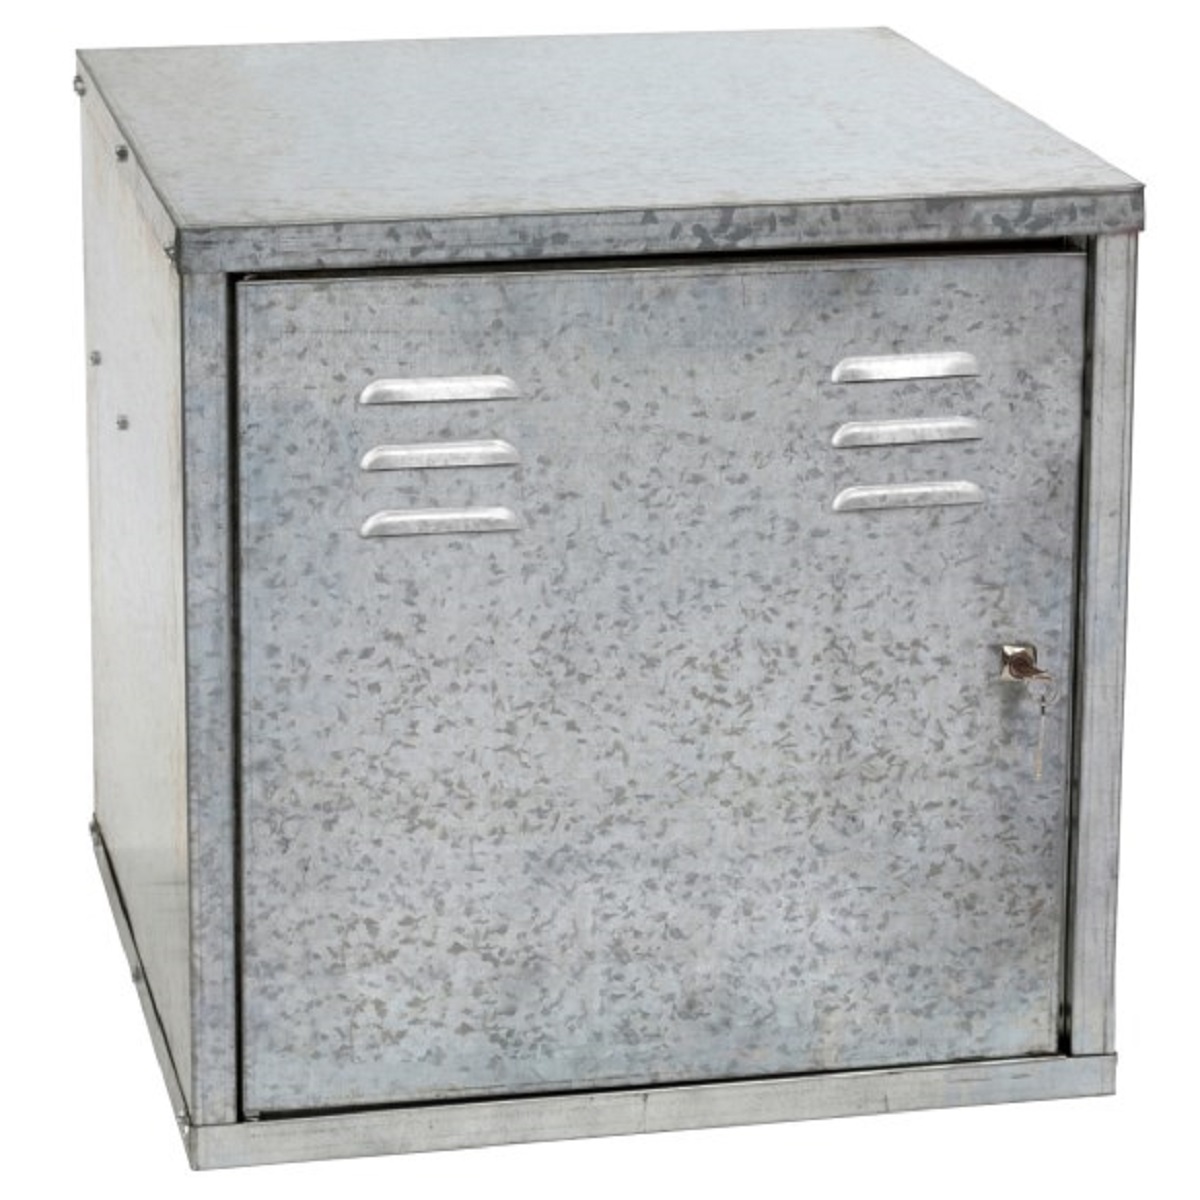 Kerbl Saddle Cabinet Extension Box 60x60x60cm